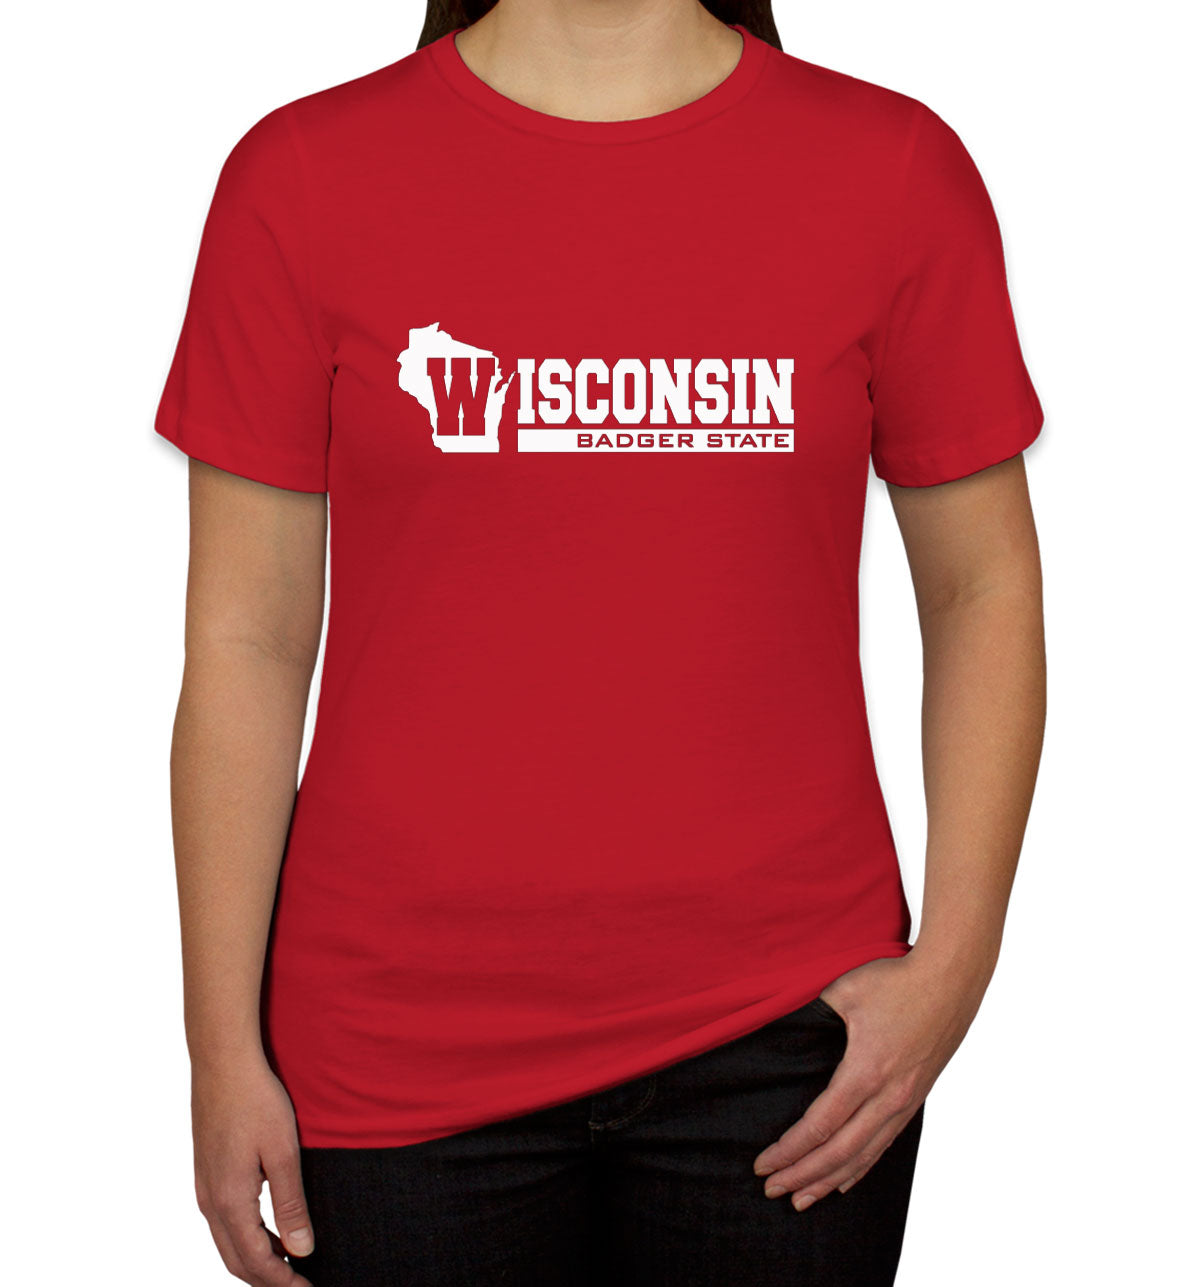 Wisconsin Badger State Women's T-shirt